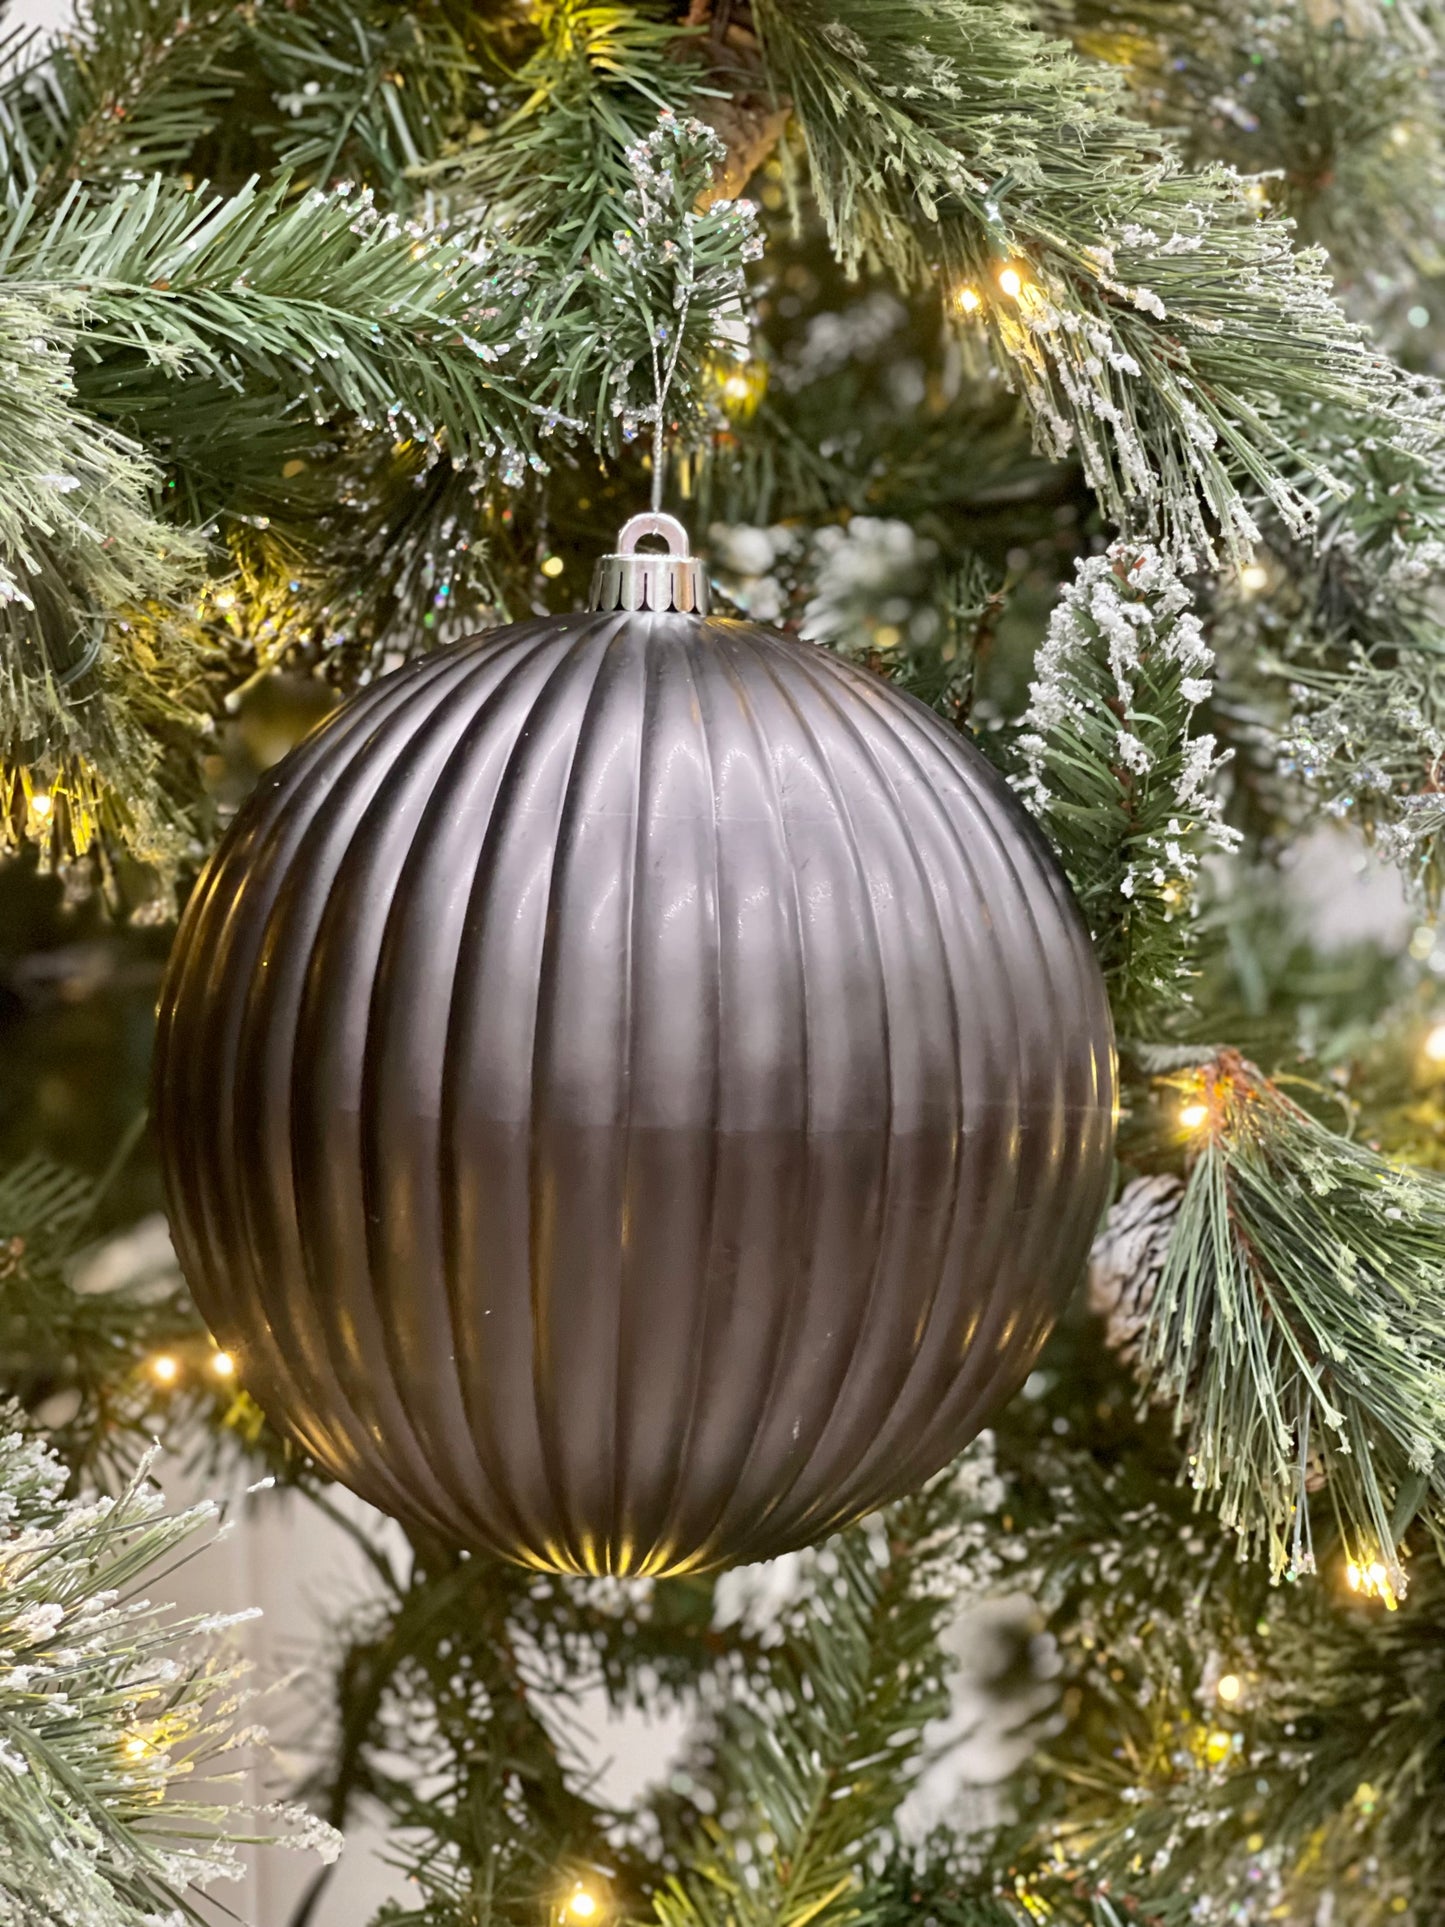 8 Inch Matte Black Vertical Striped Ornament Ball